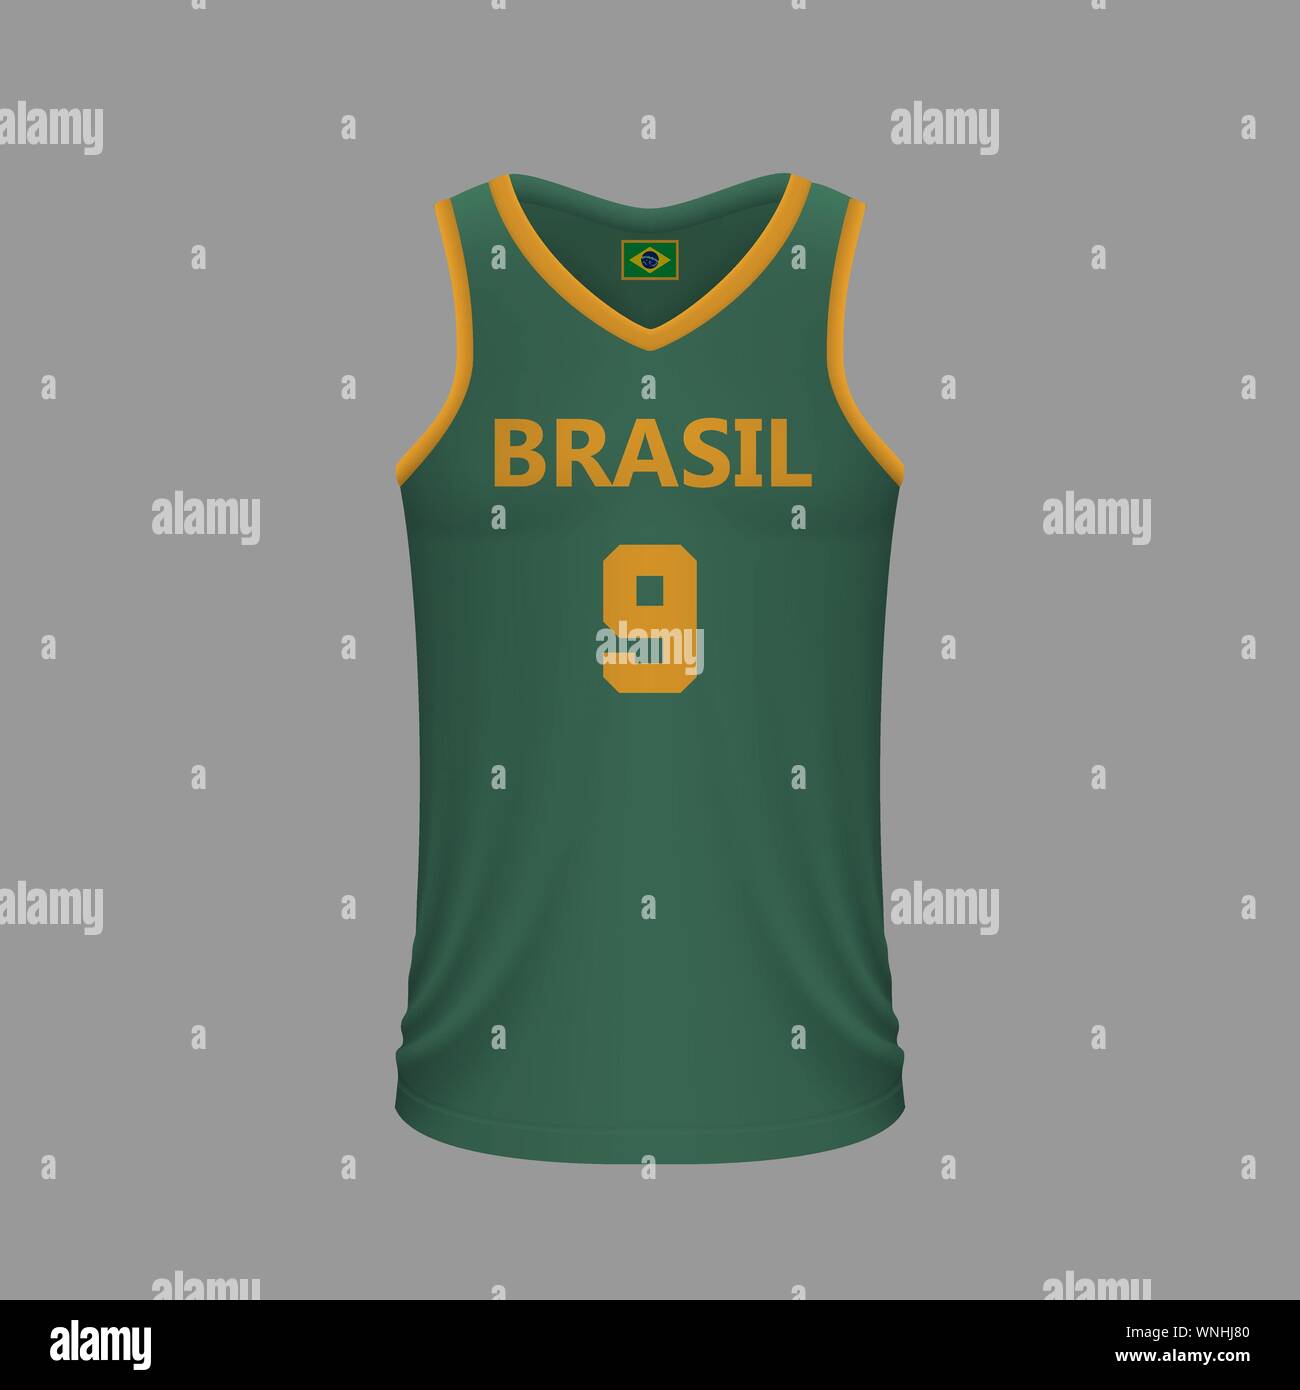 basketball jersey brazil